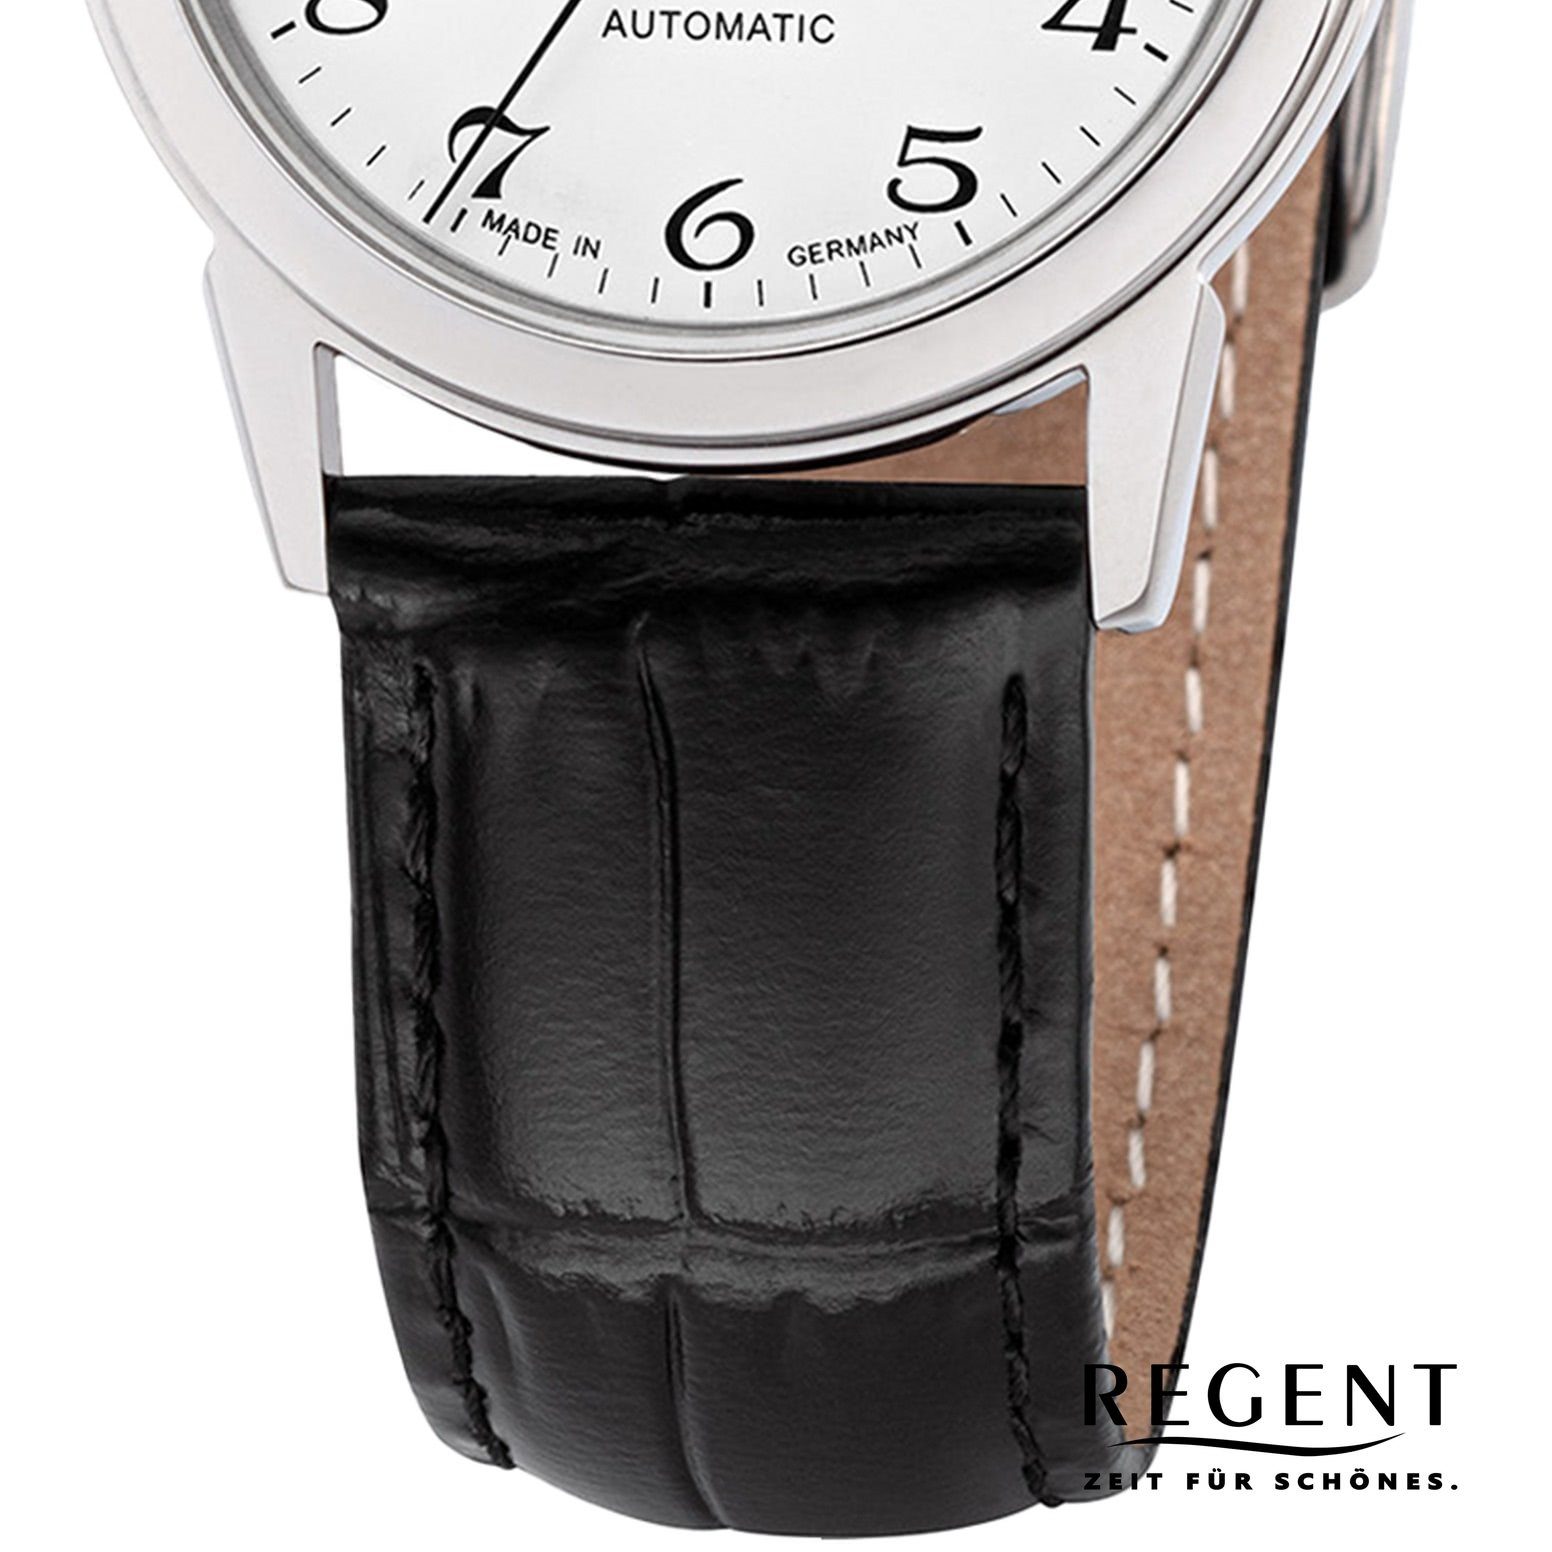 Regent Quarzuhr Lederbandarmband Armbanduhr Regent mittel Damen rund, (ca. Armbanduhr Damen Analoganzeige, 32mm)